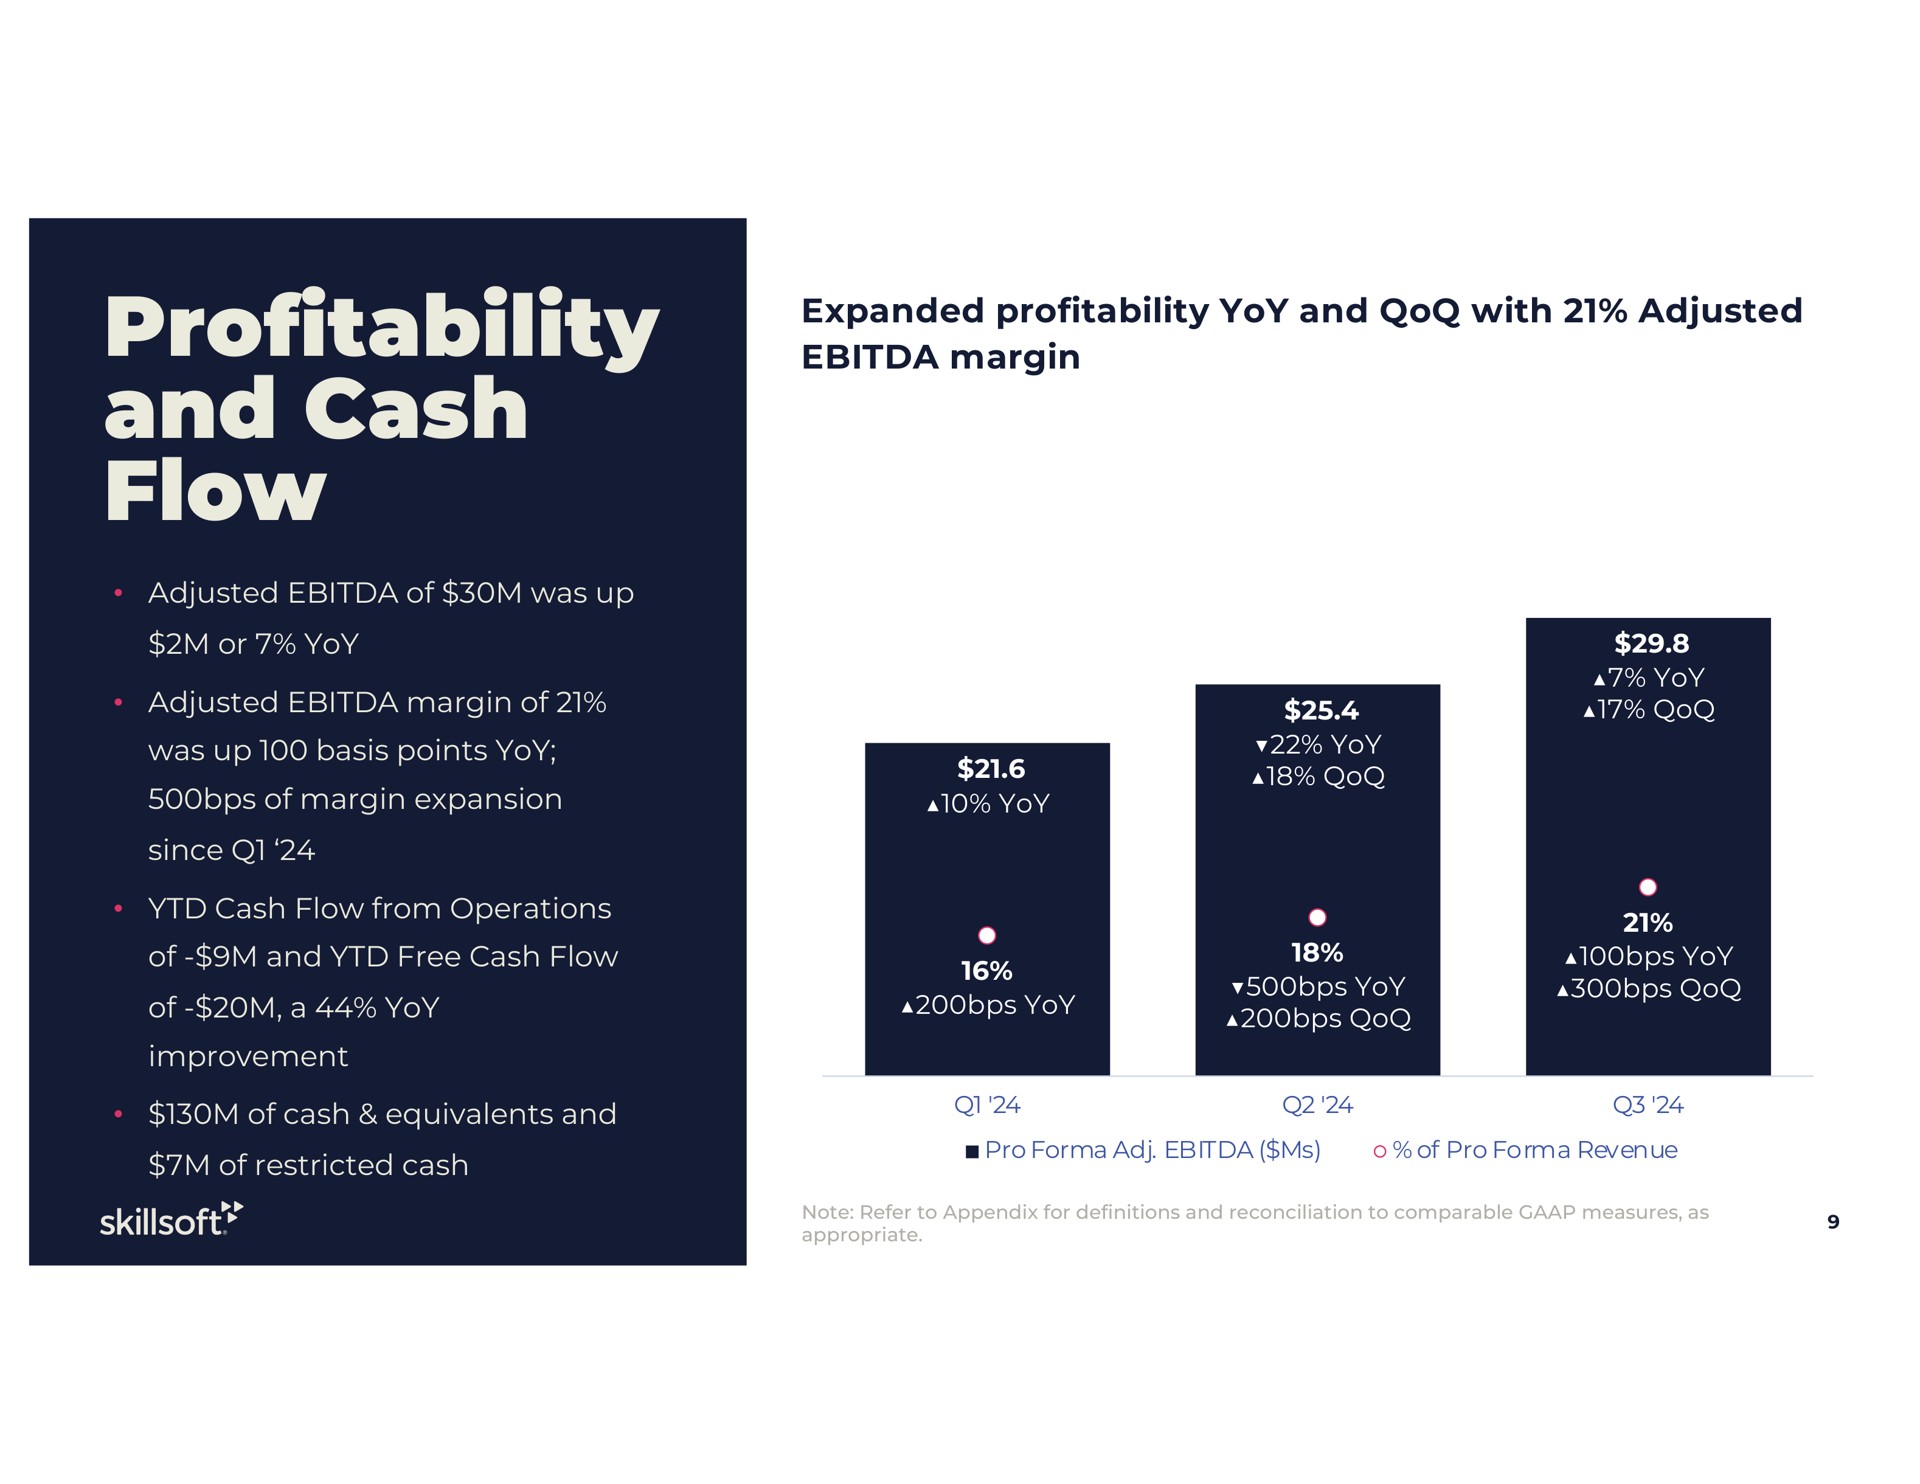 profitability and cash flow expanded profitability yoy and with adjusted margin yak | Skillsoft